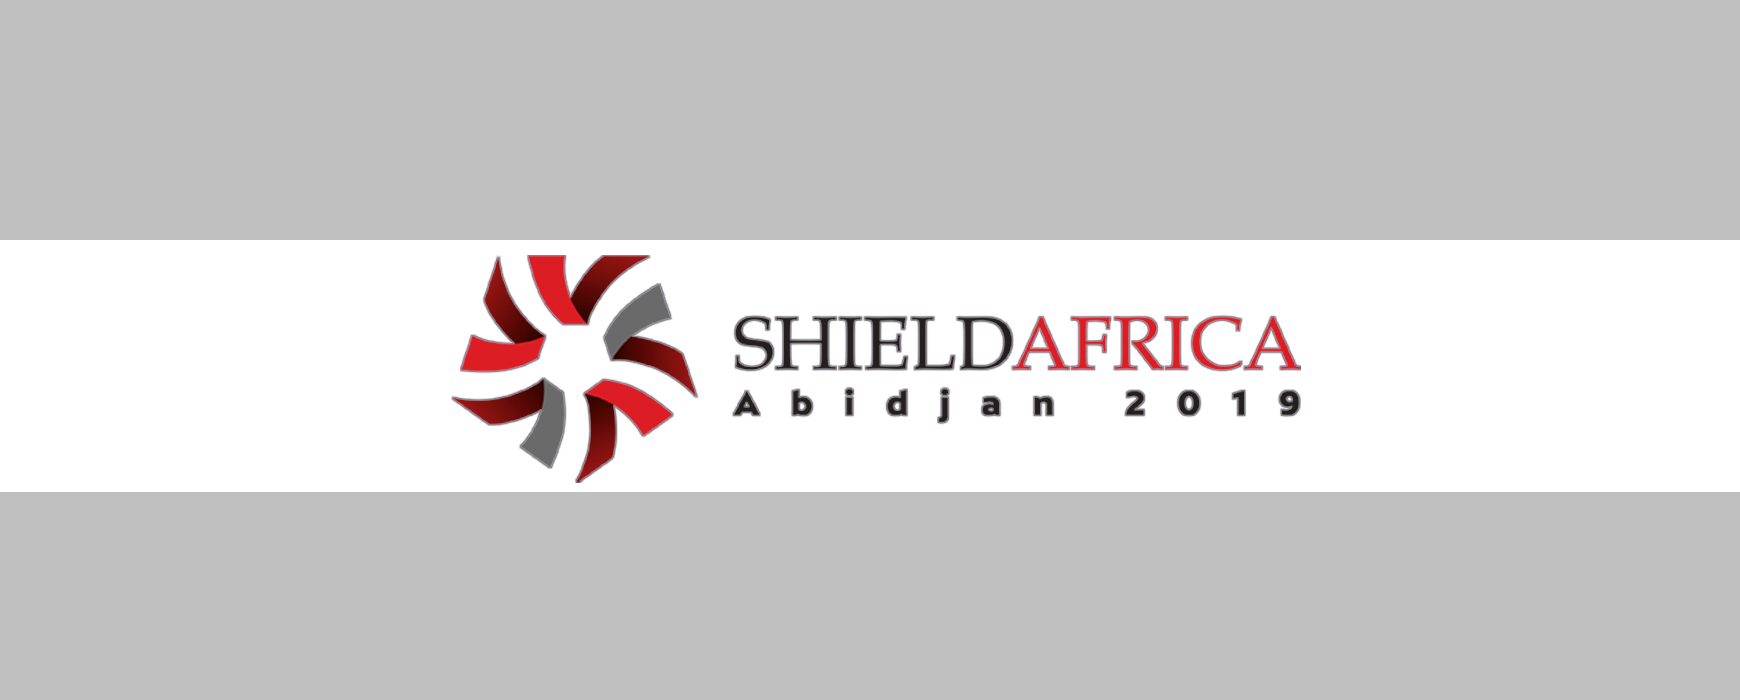 DÉFENSE/ SÉCURITÉ : IGN FI présente au salon SHIELD AFRICA